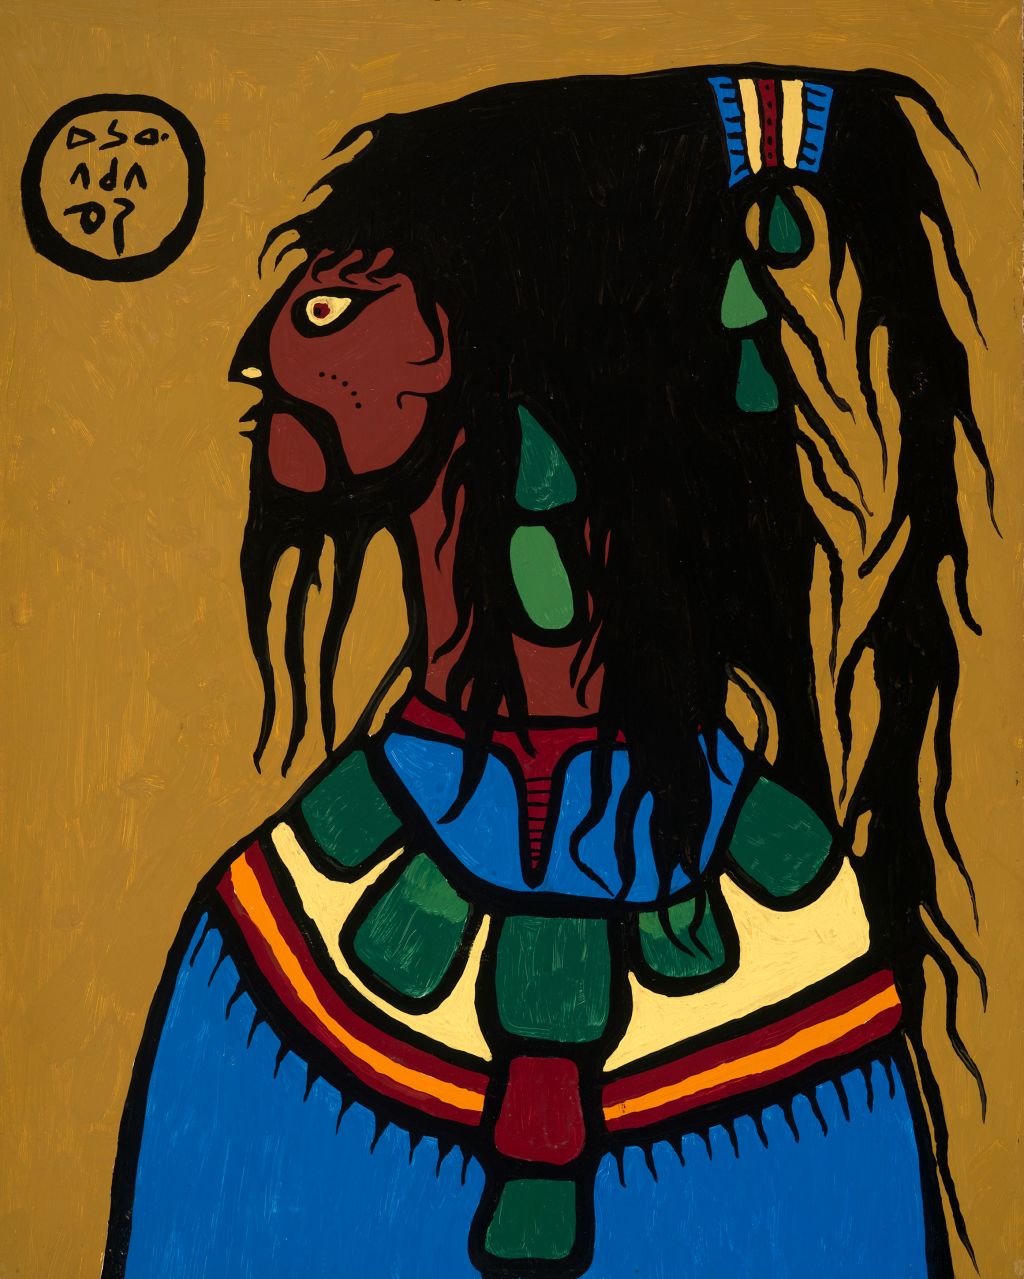 Portrait painting of a shaman's profile